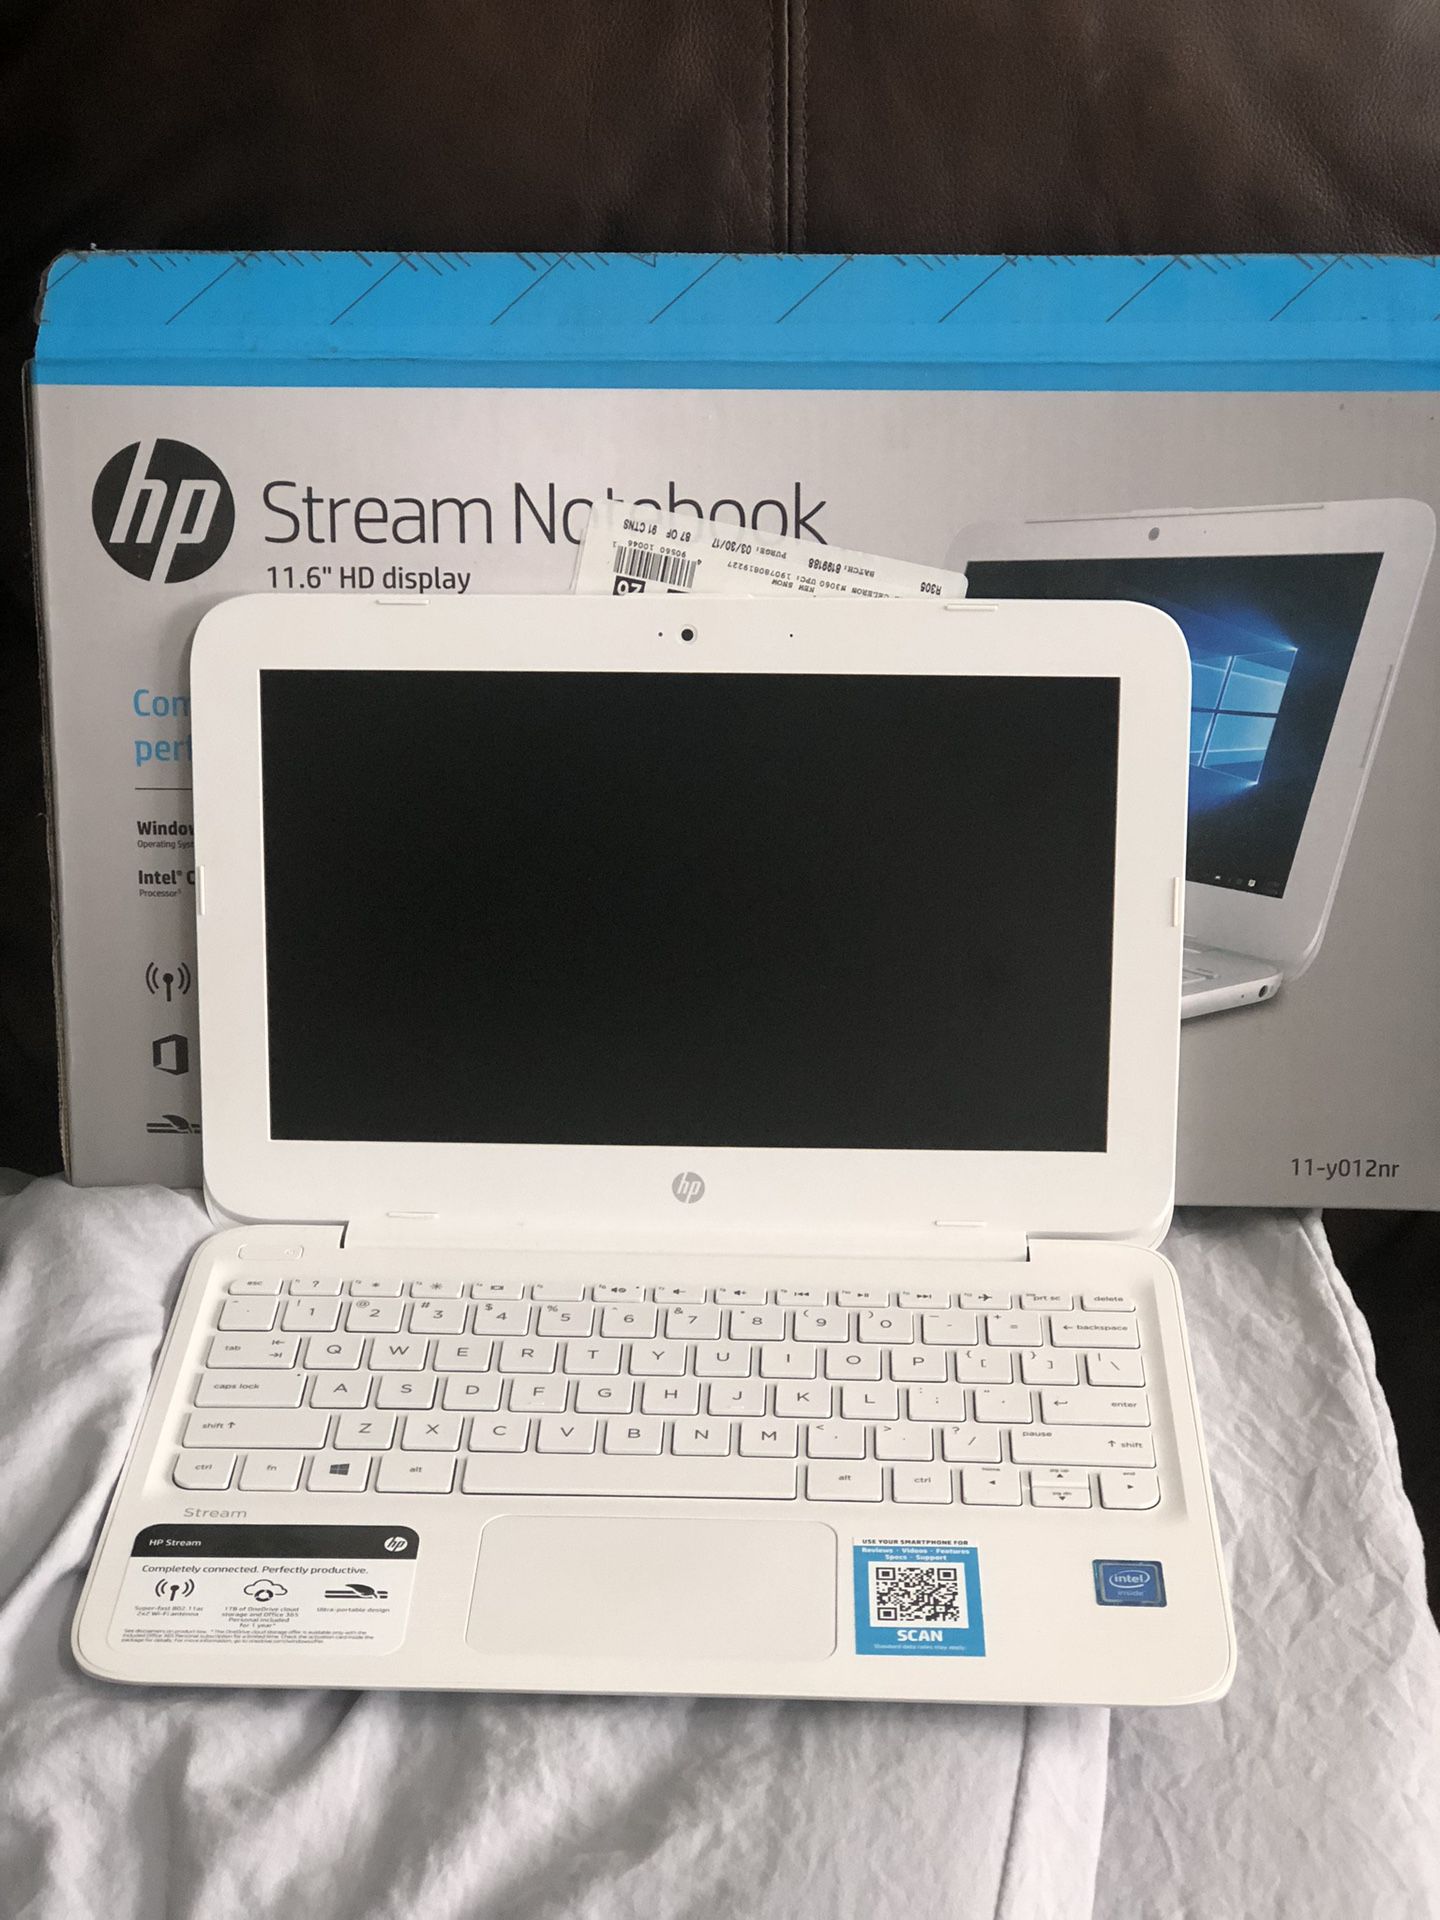 HP Stream Notebook